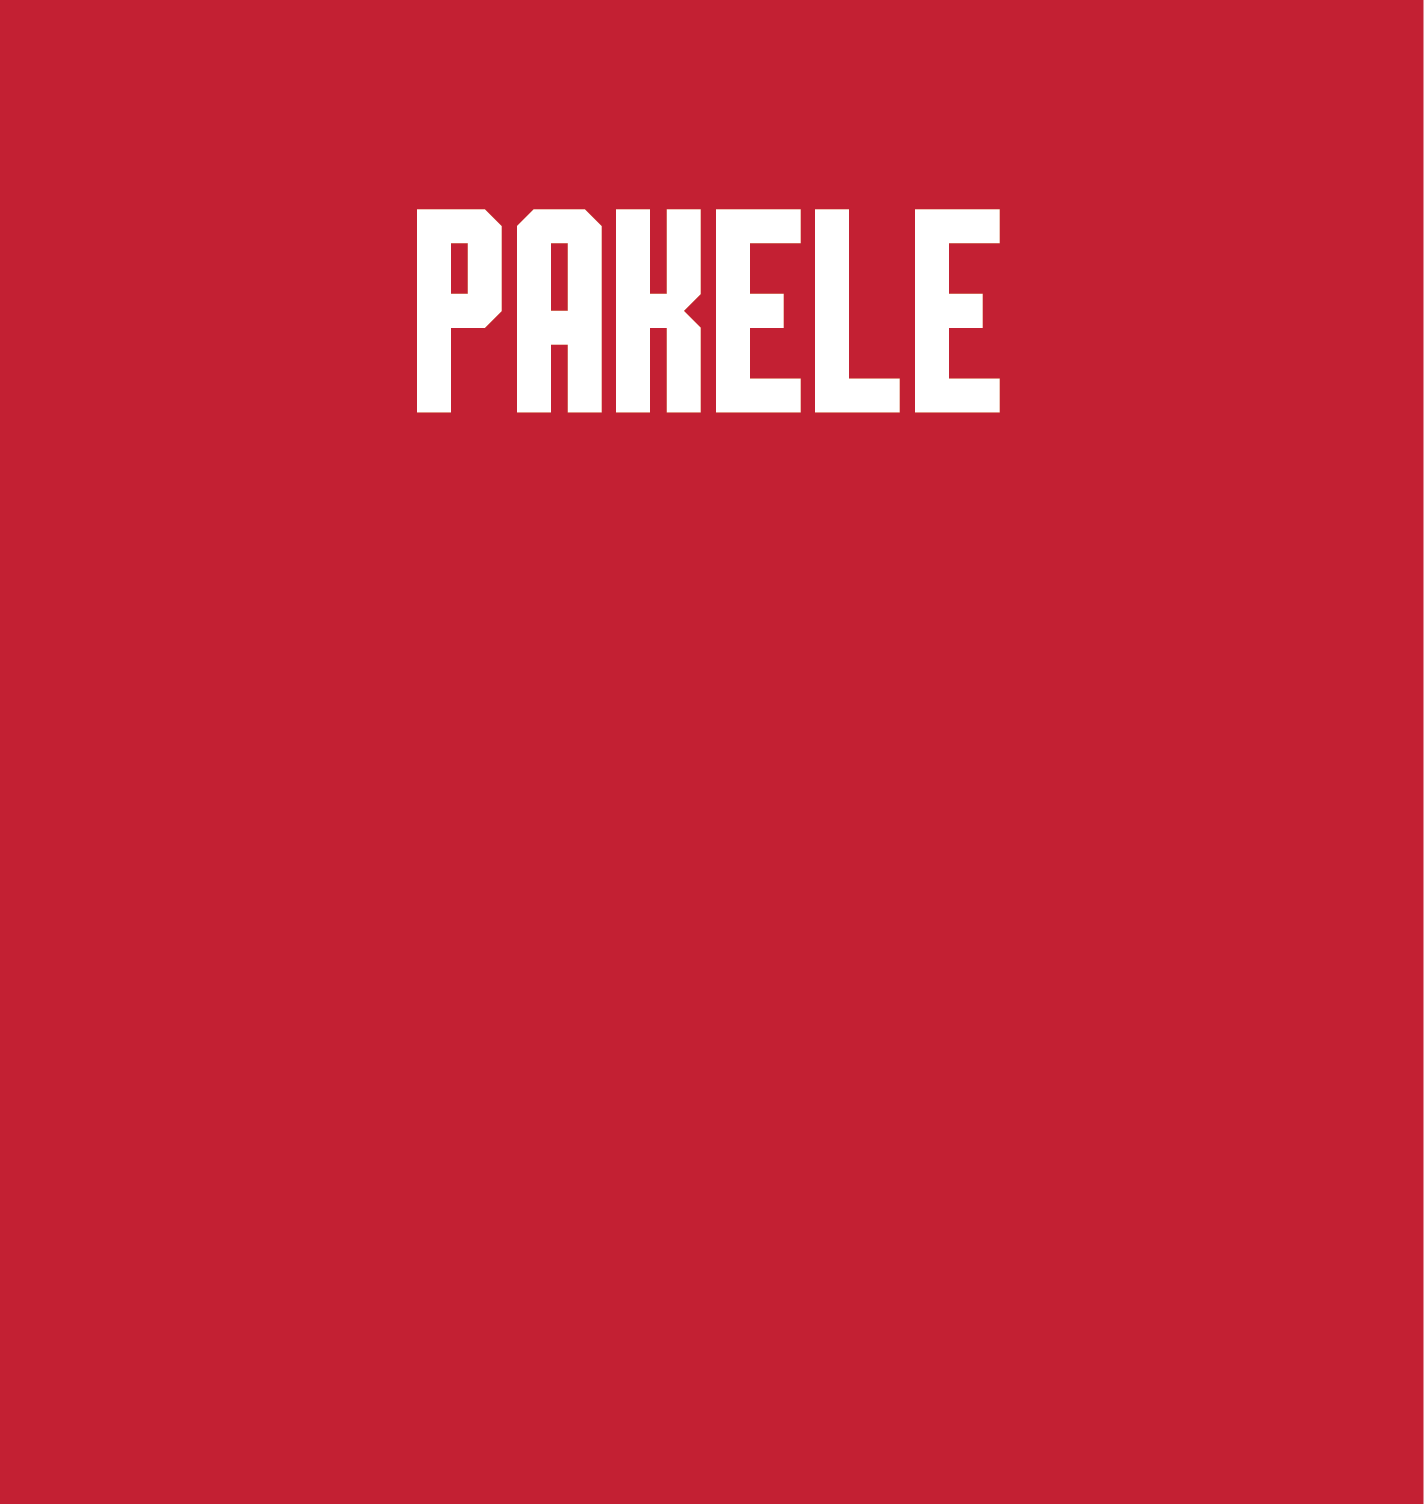 Jesse-Lee Pakele – The NIL Store, OSU